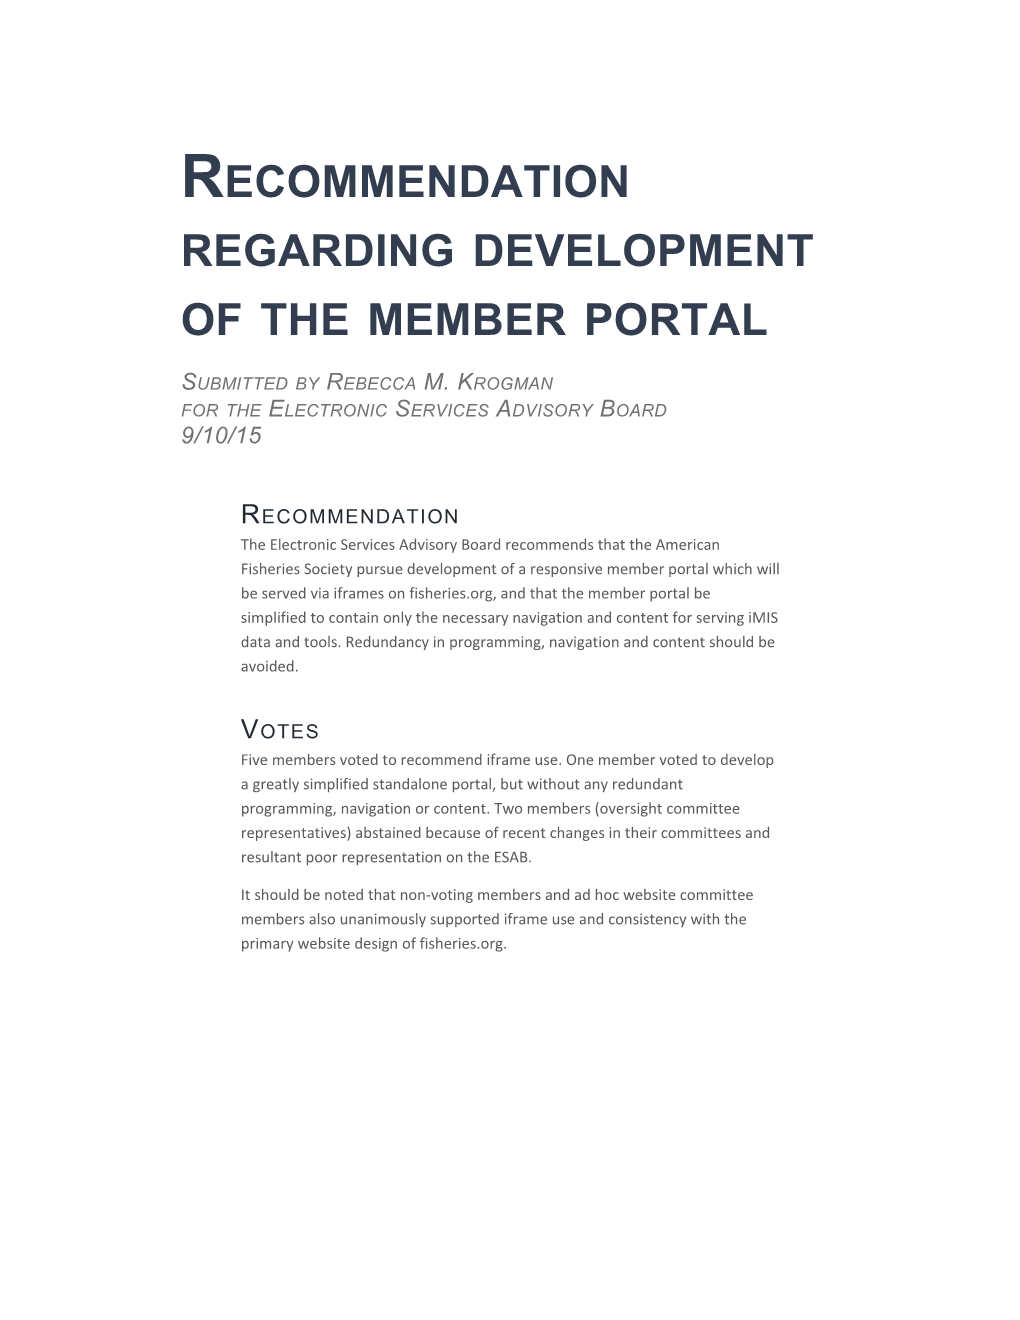 Recommendation Regarding Development of the Member Portal